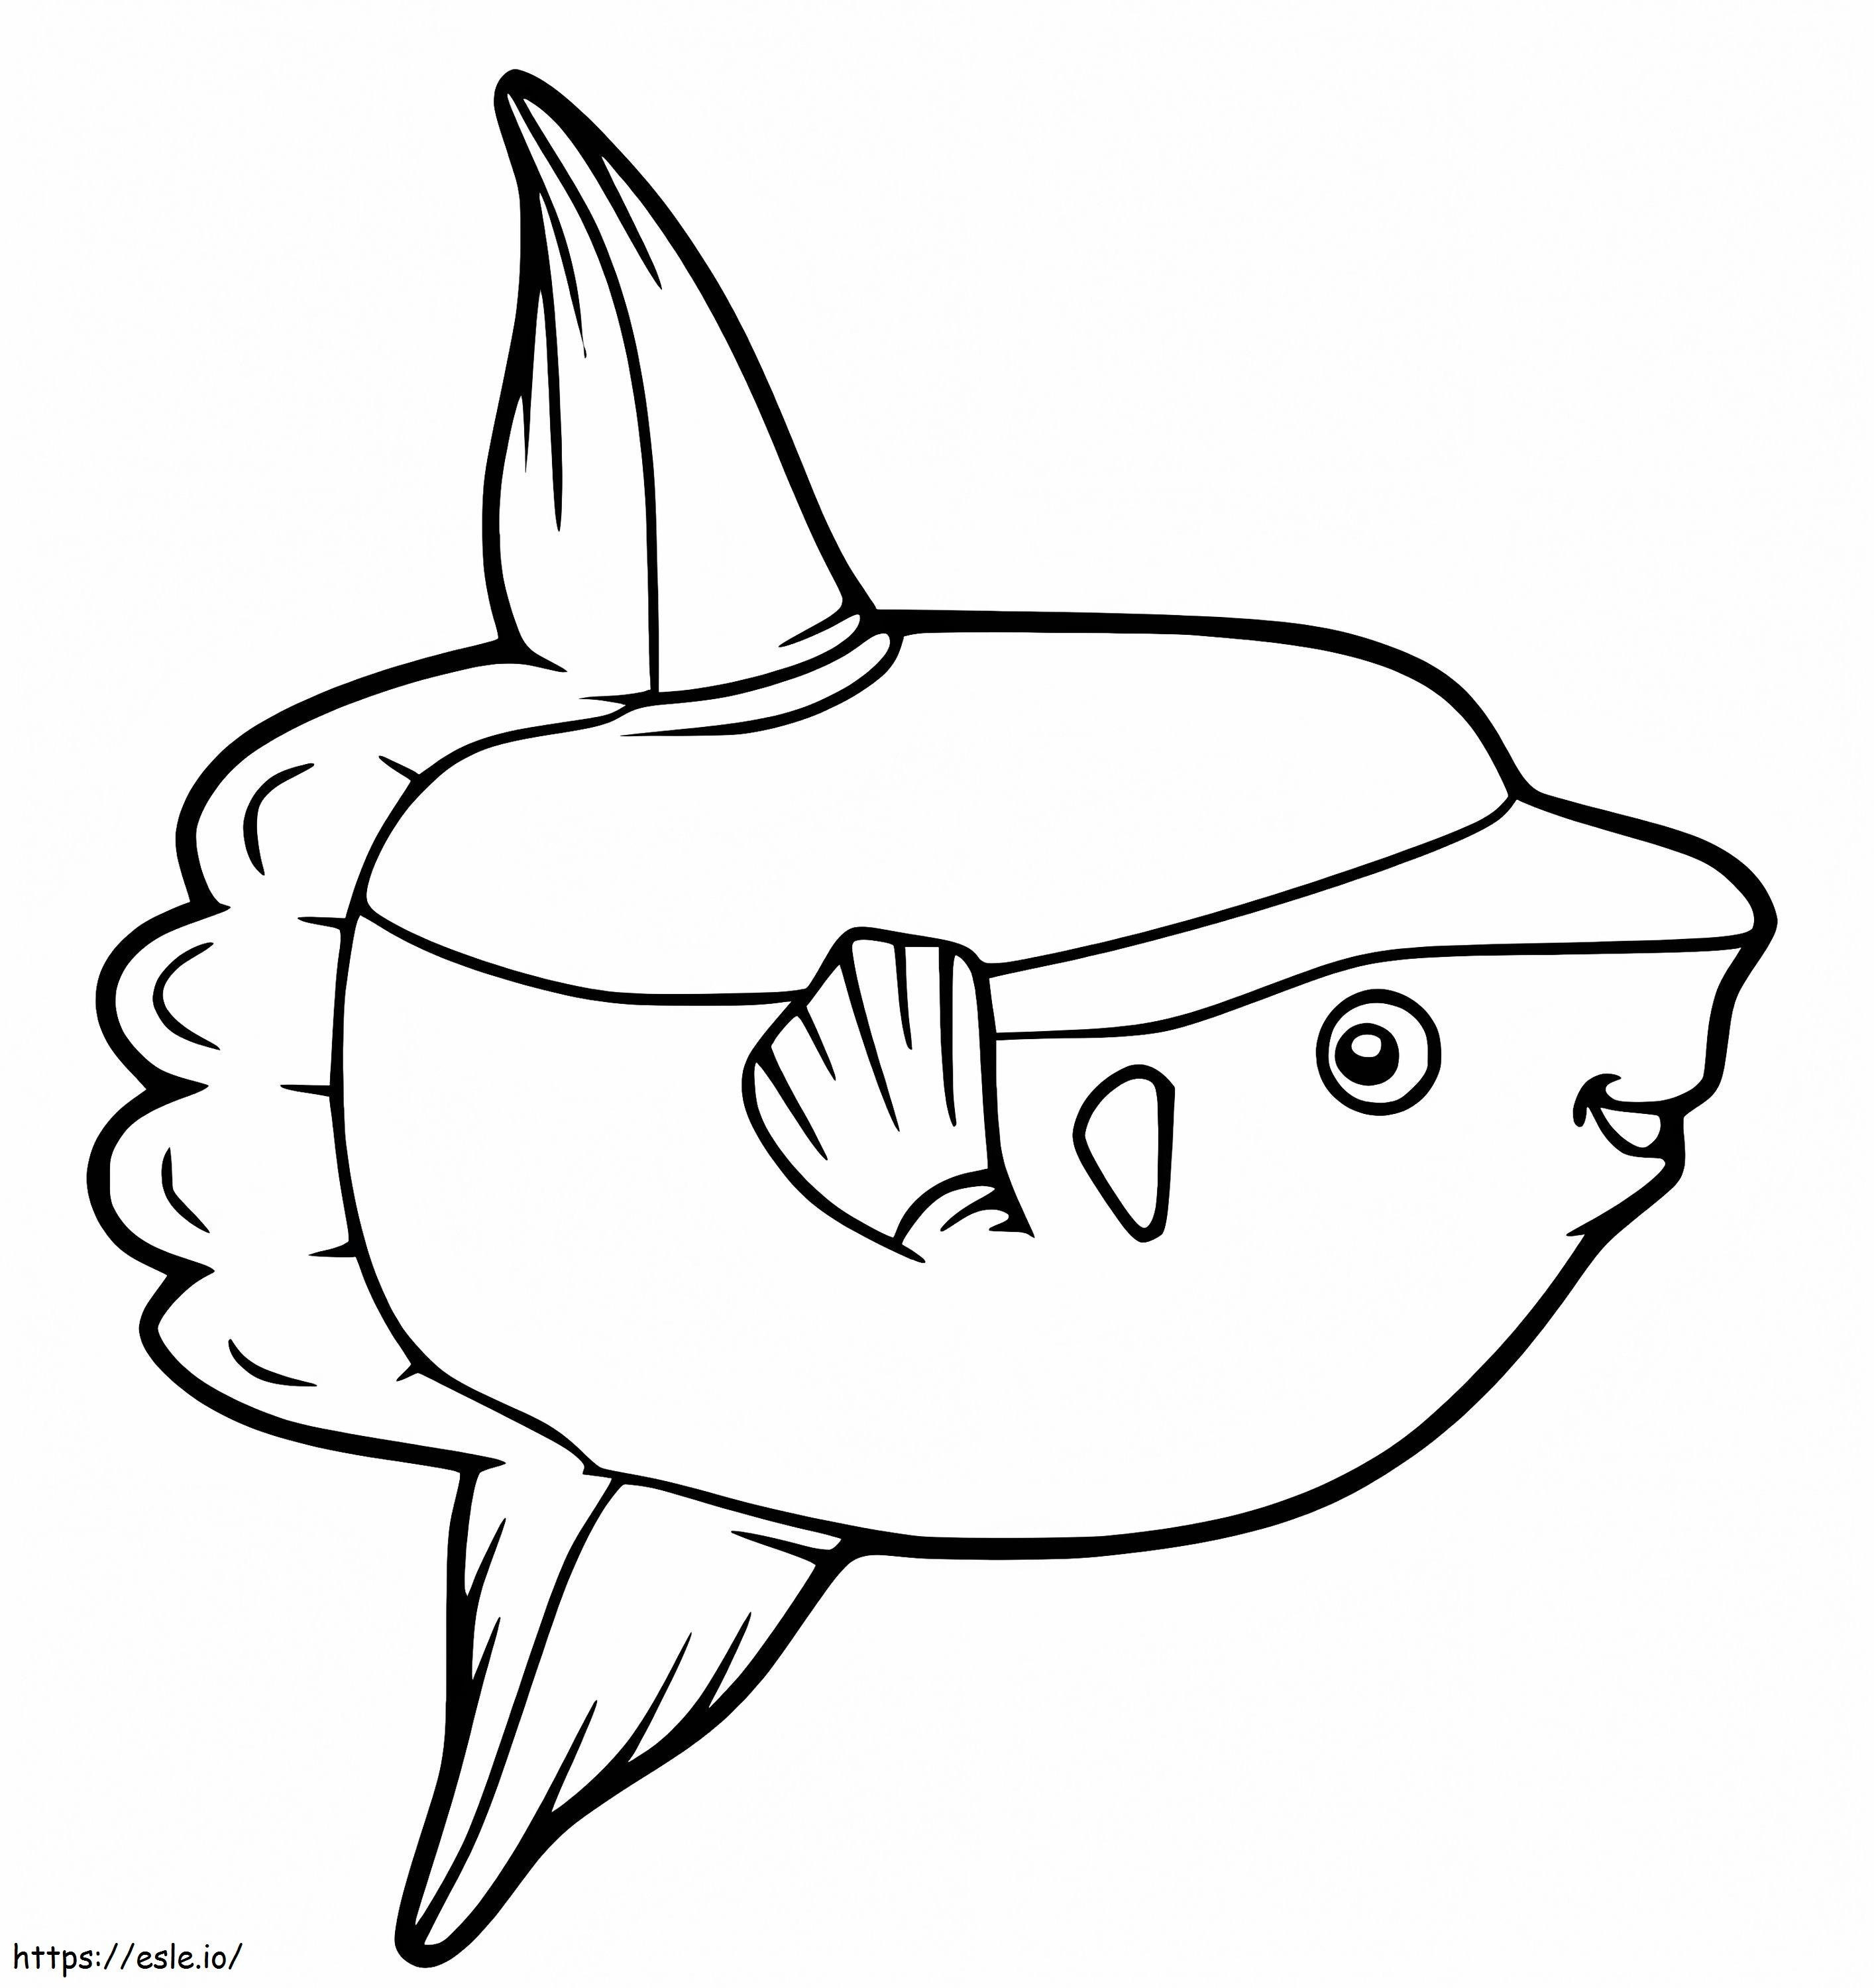 Sunfish yang lucu Gambar Mewarnai